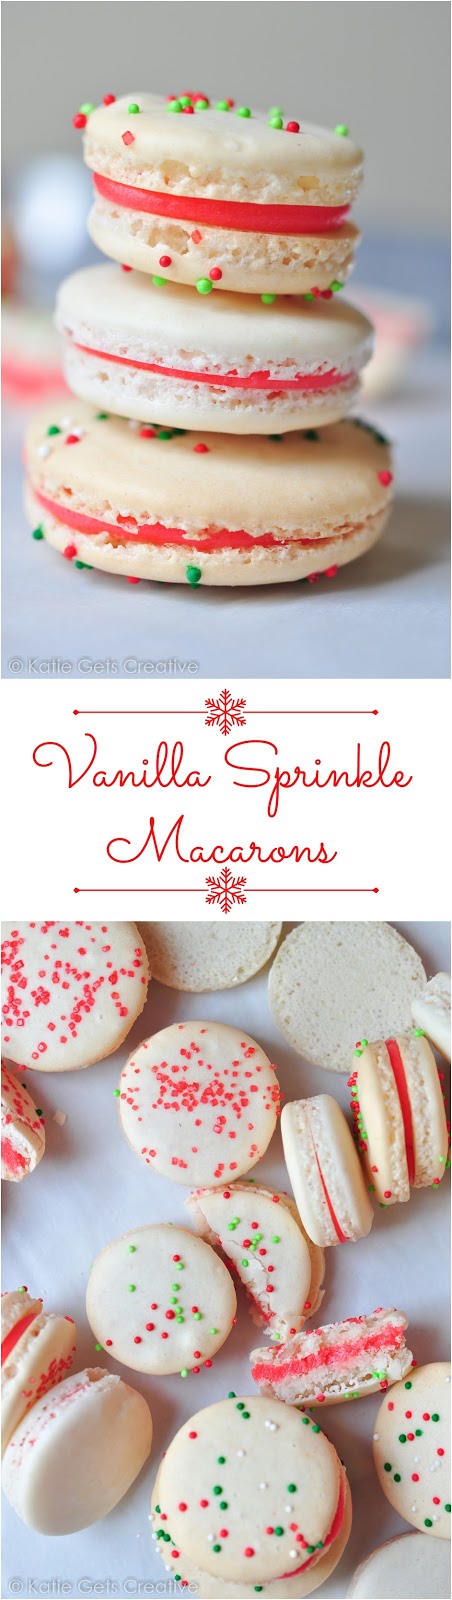 Vanilla Sprinkle Christmas Macarons from Katie Gets Creative 